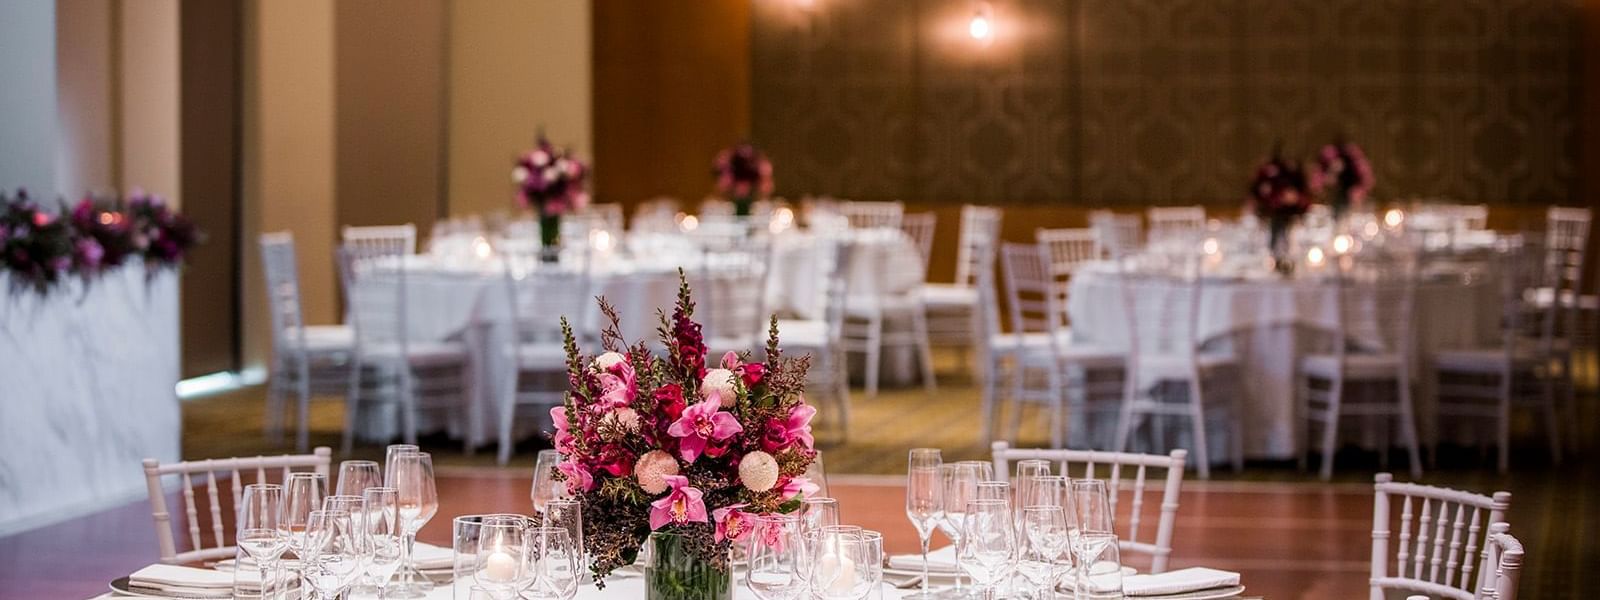 Banquet set-up in Garden Room at Crown Hotel Melbourne